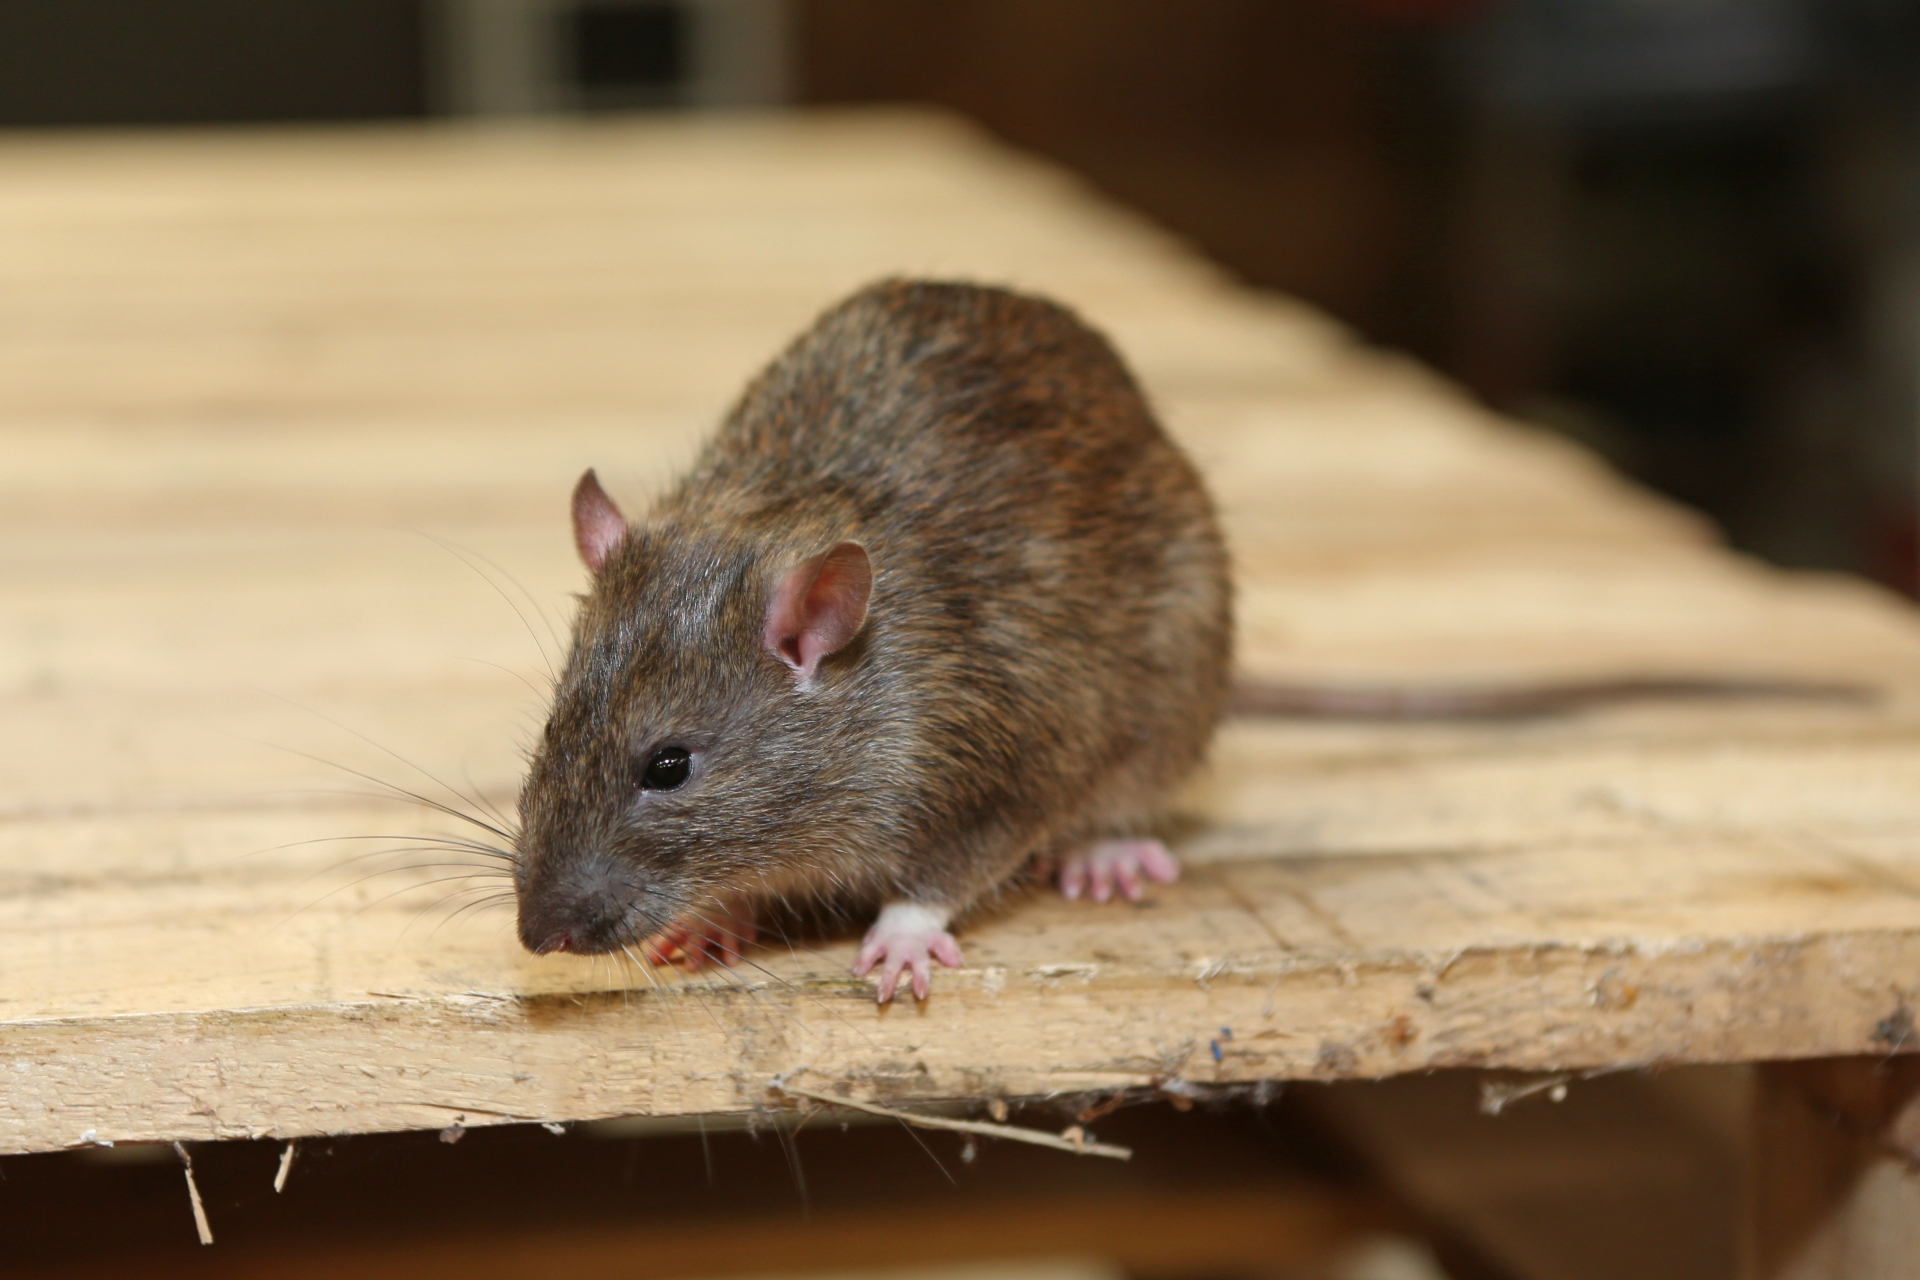 Rat extermination, Pest Control in Whitechapel, E1. Call Now 020 8166 9746